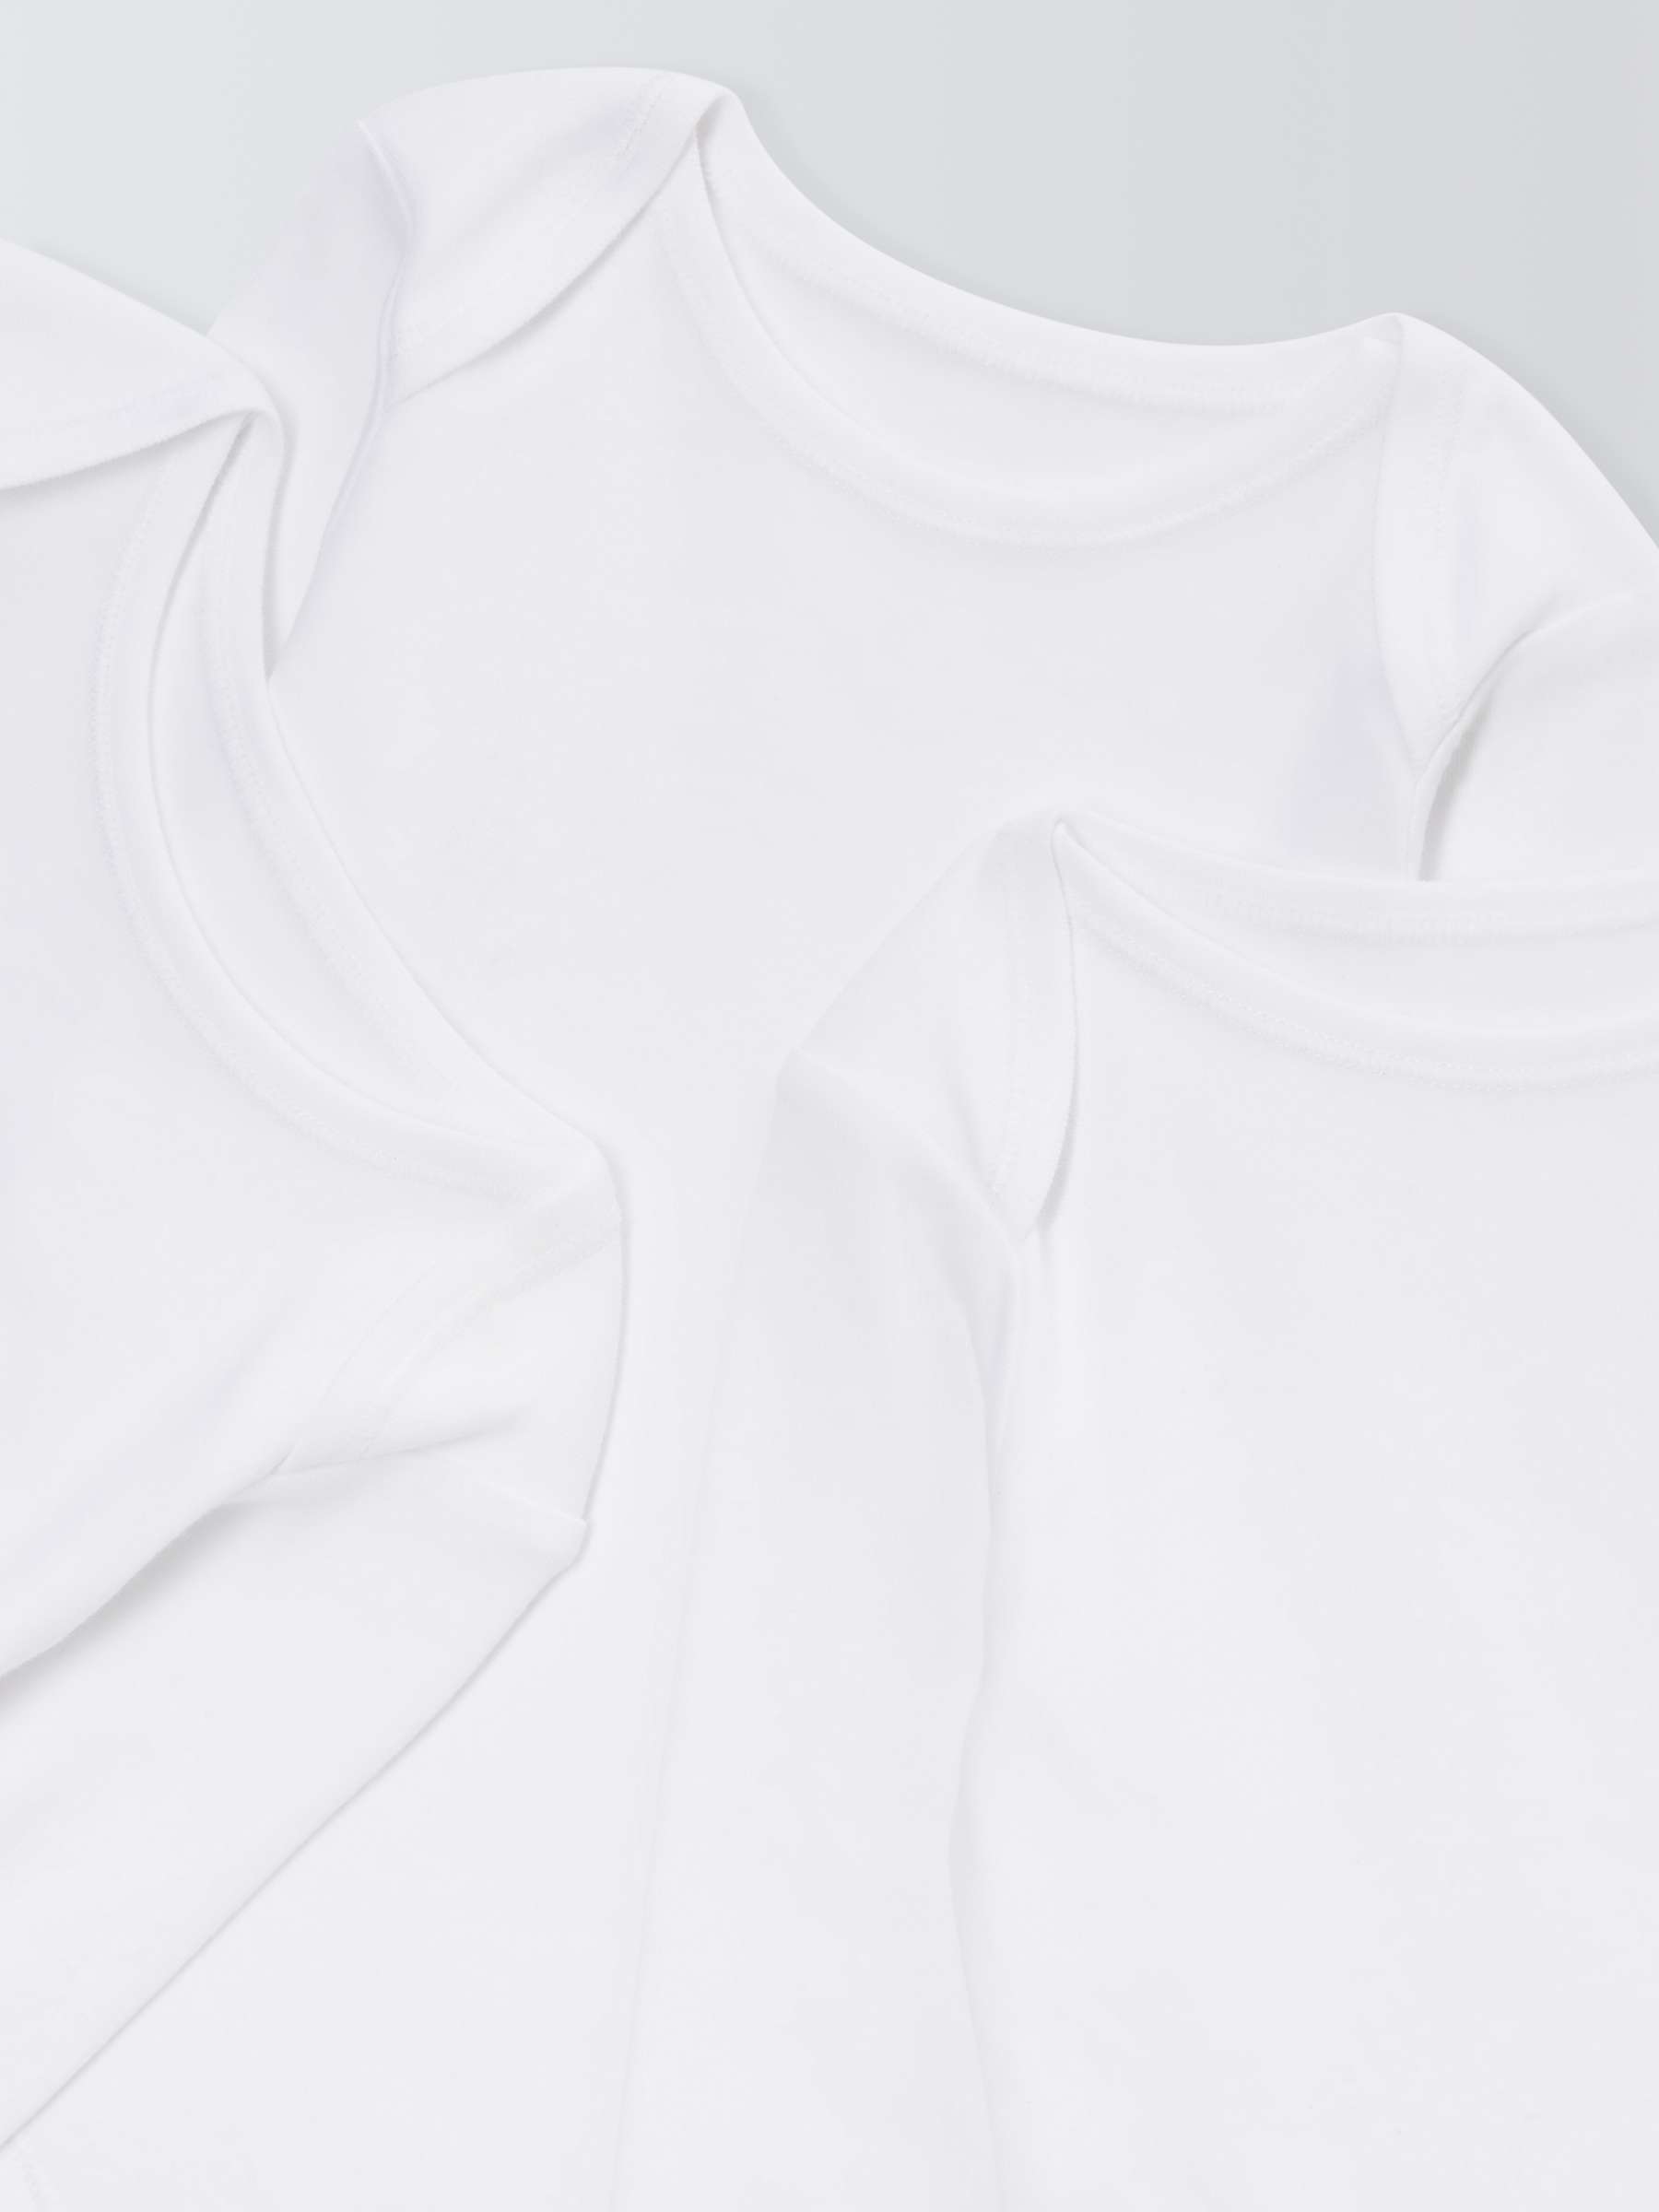 Buy John Lewis Baby Long Sleeve GOTS Organic Cotton Bodysuit, Pack of 5, White Online at johnlewis.com